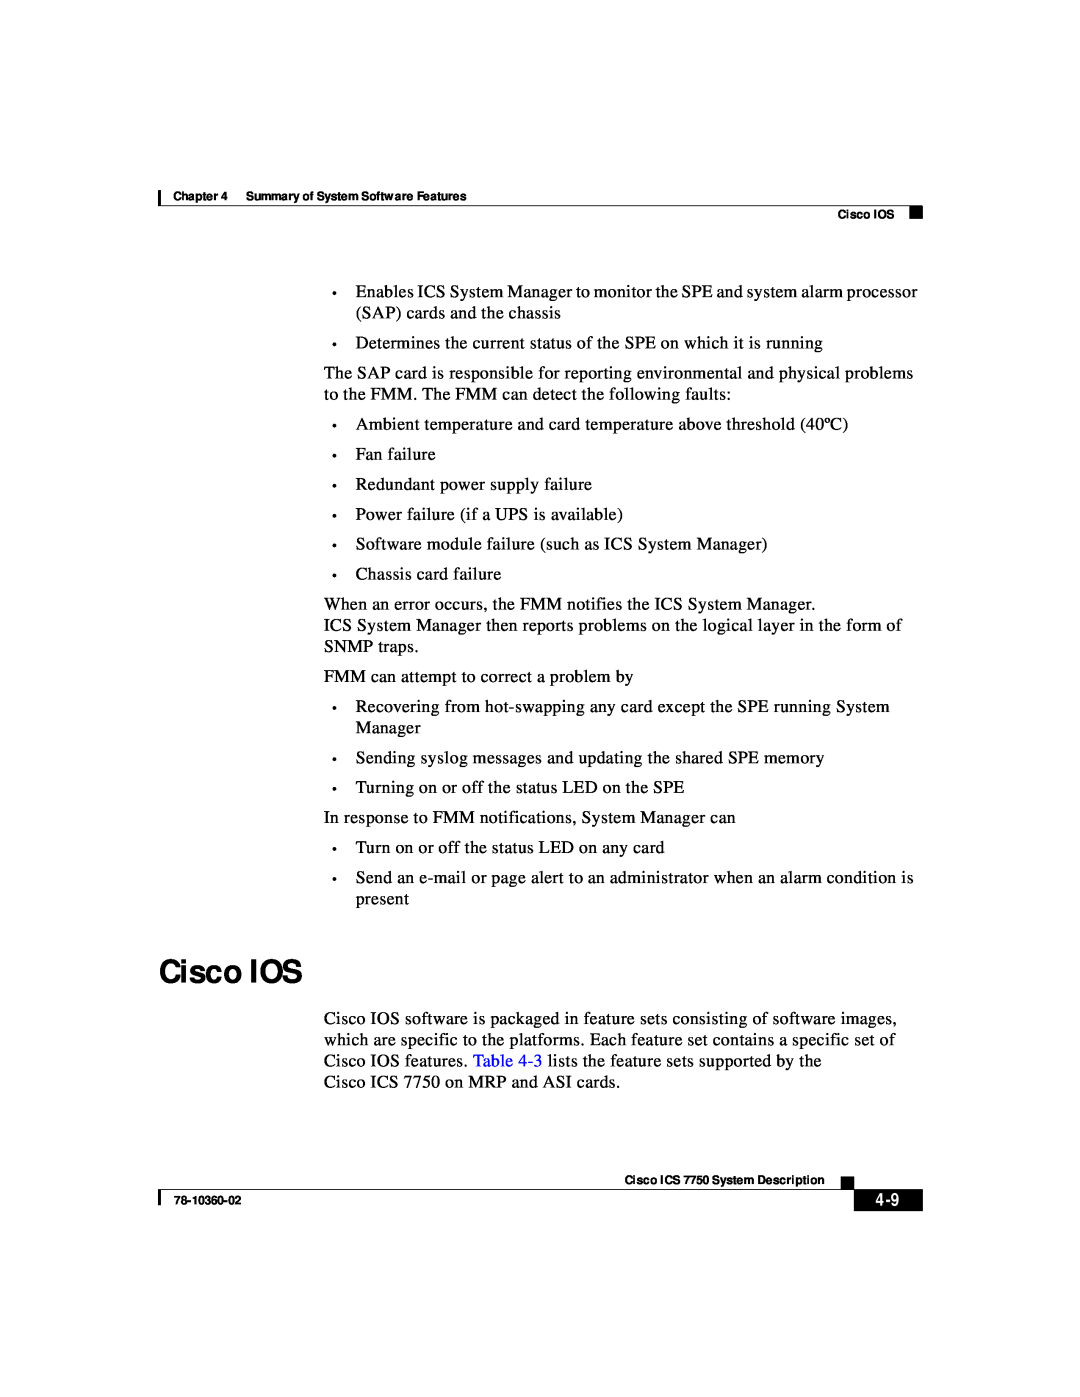 Cisco Systems ICS-7750 manual Cisco IOS 